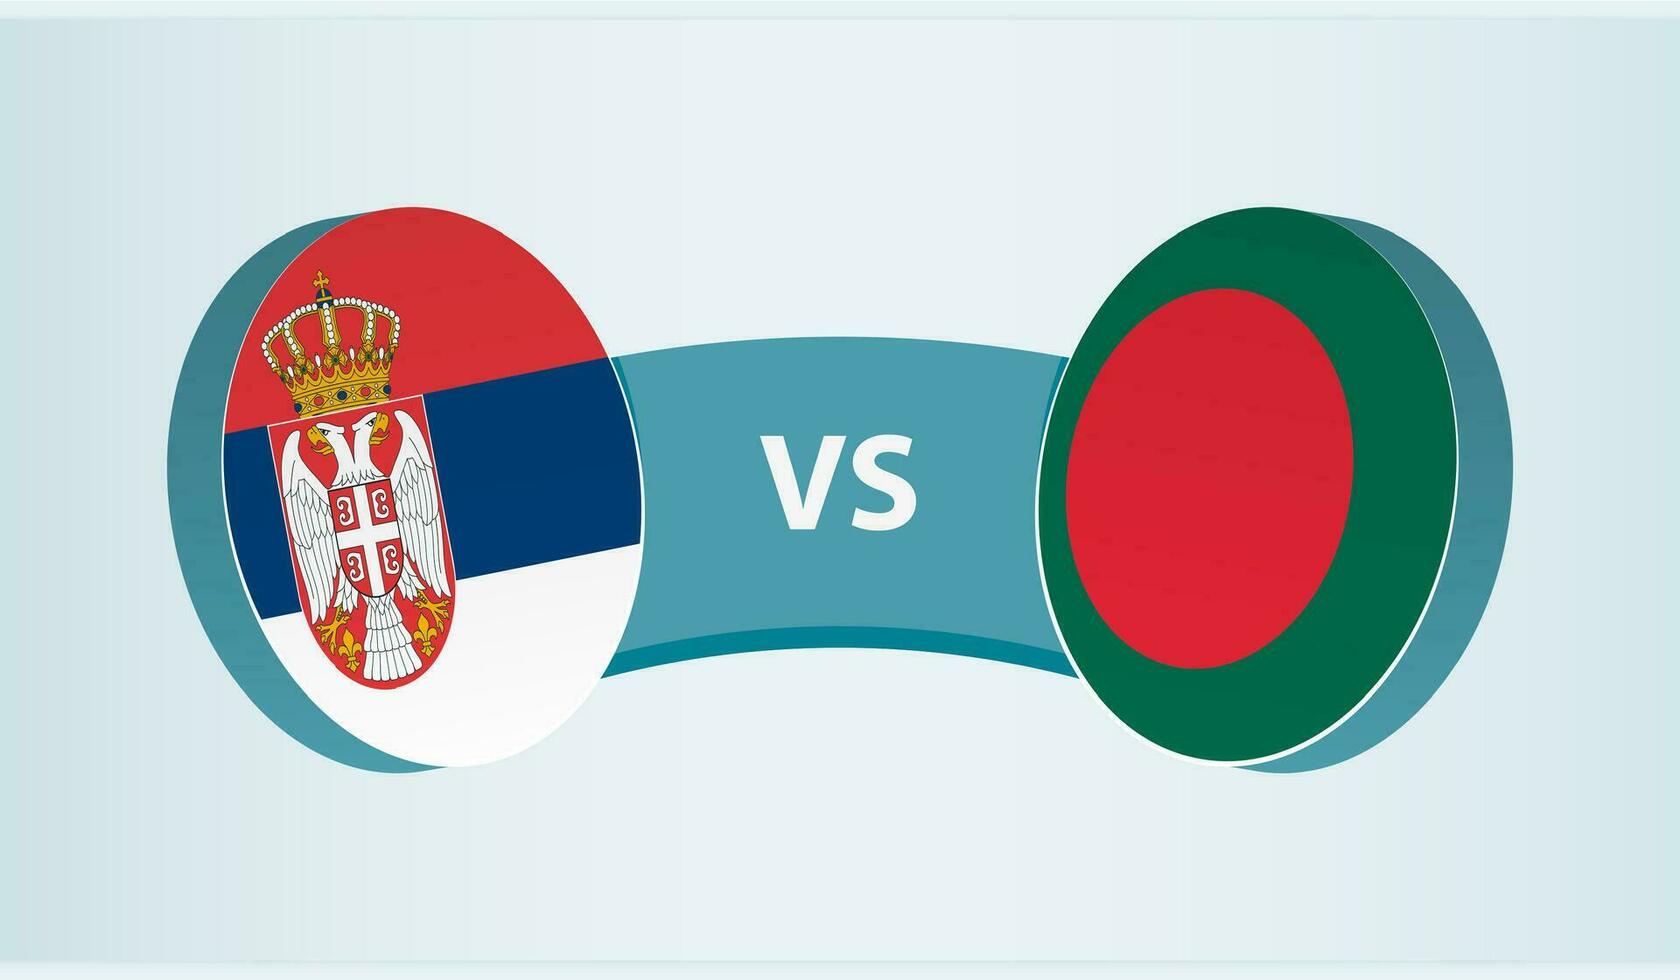 serbia mot Bangladesh, team sporter konkurrens begrepp. vektor